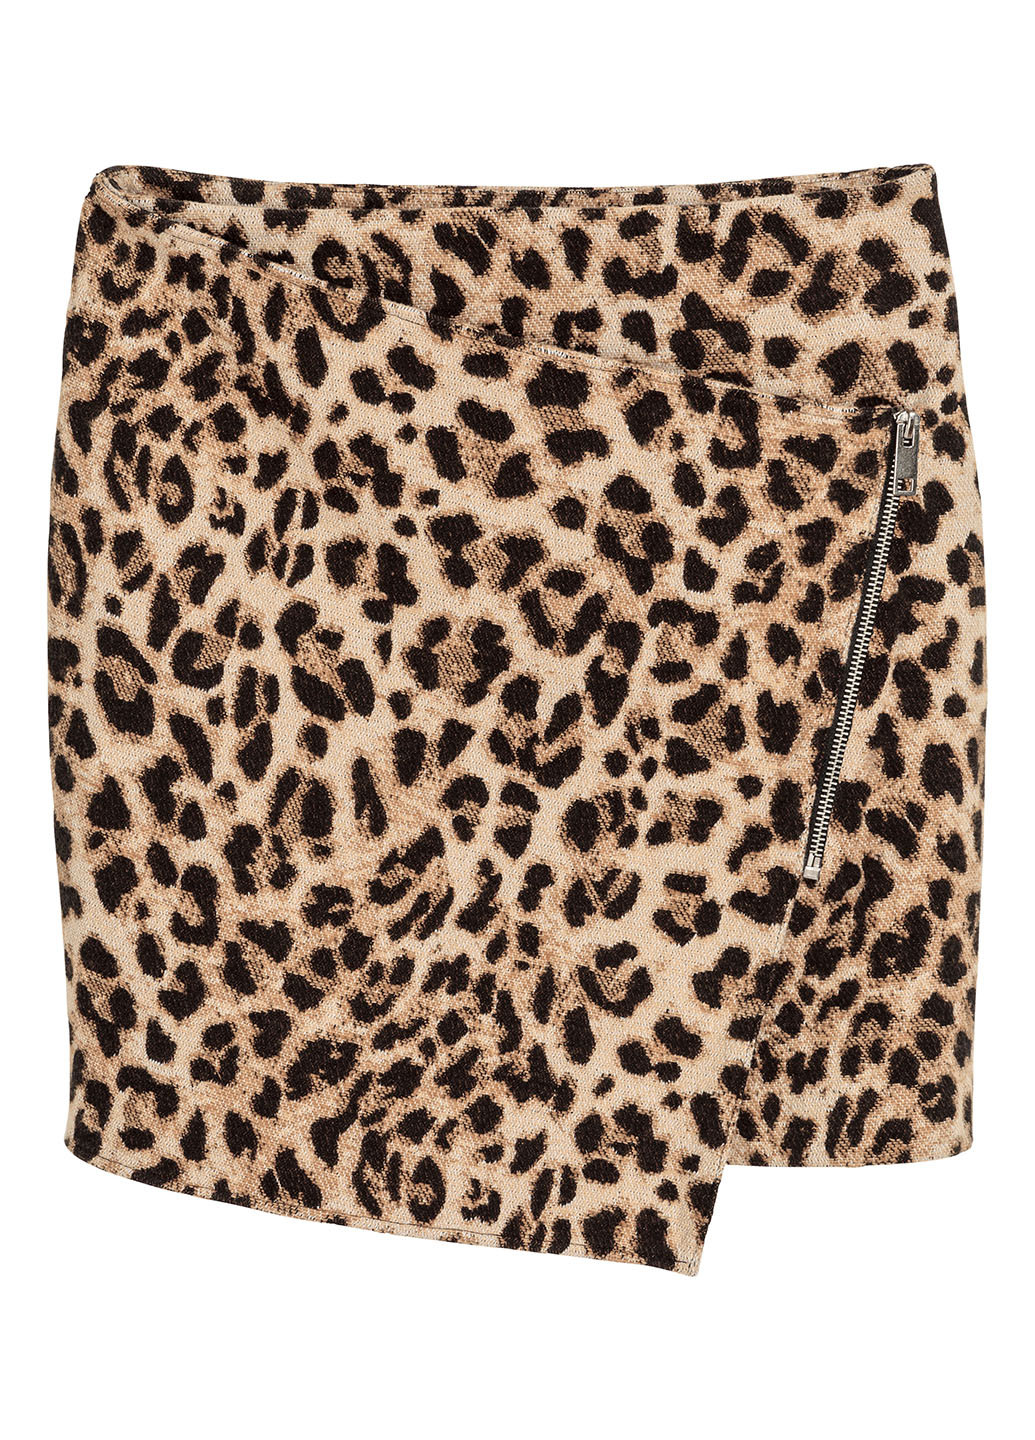 Светло-коричневая кэжуал леопардовая юбка H&M на запах